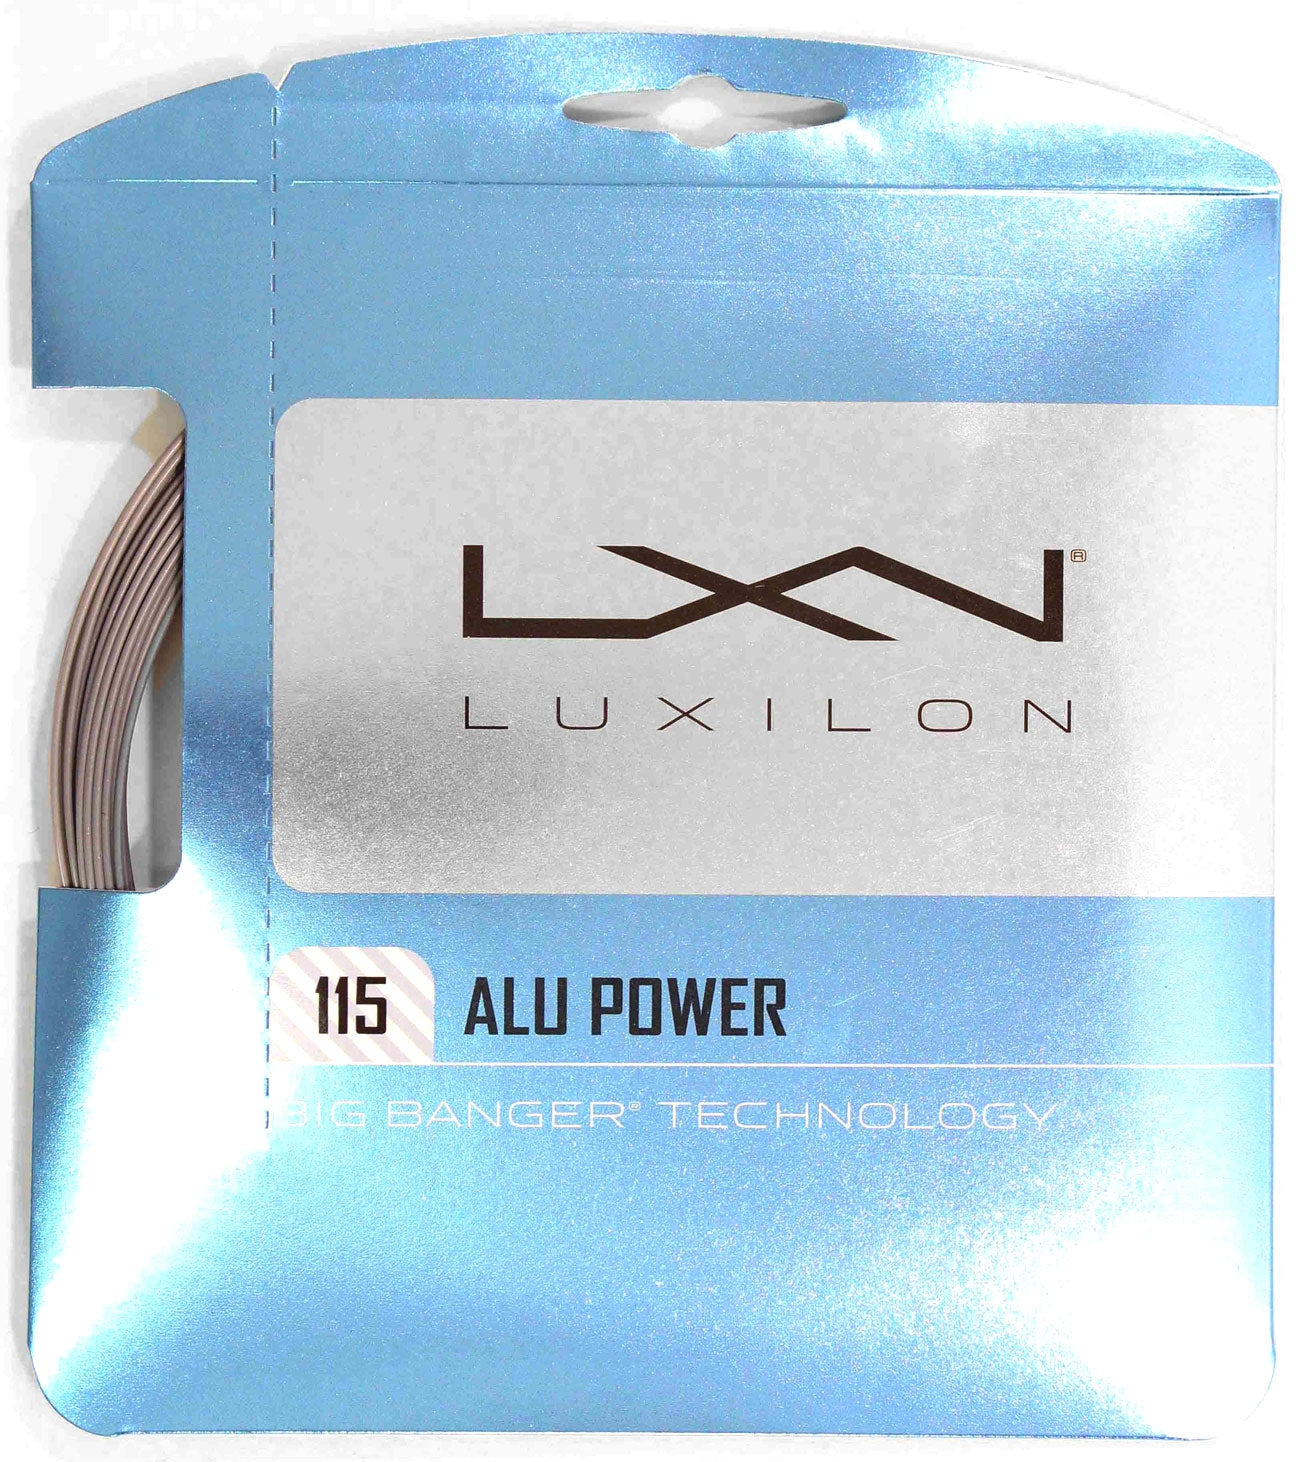 Luxilon Big Banger Alu Power 115 Argent